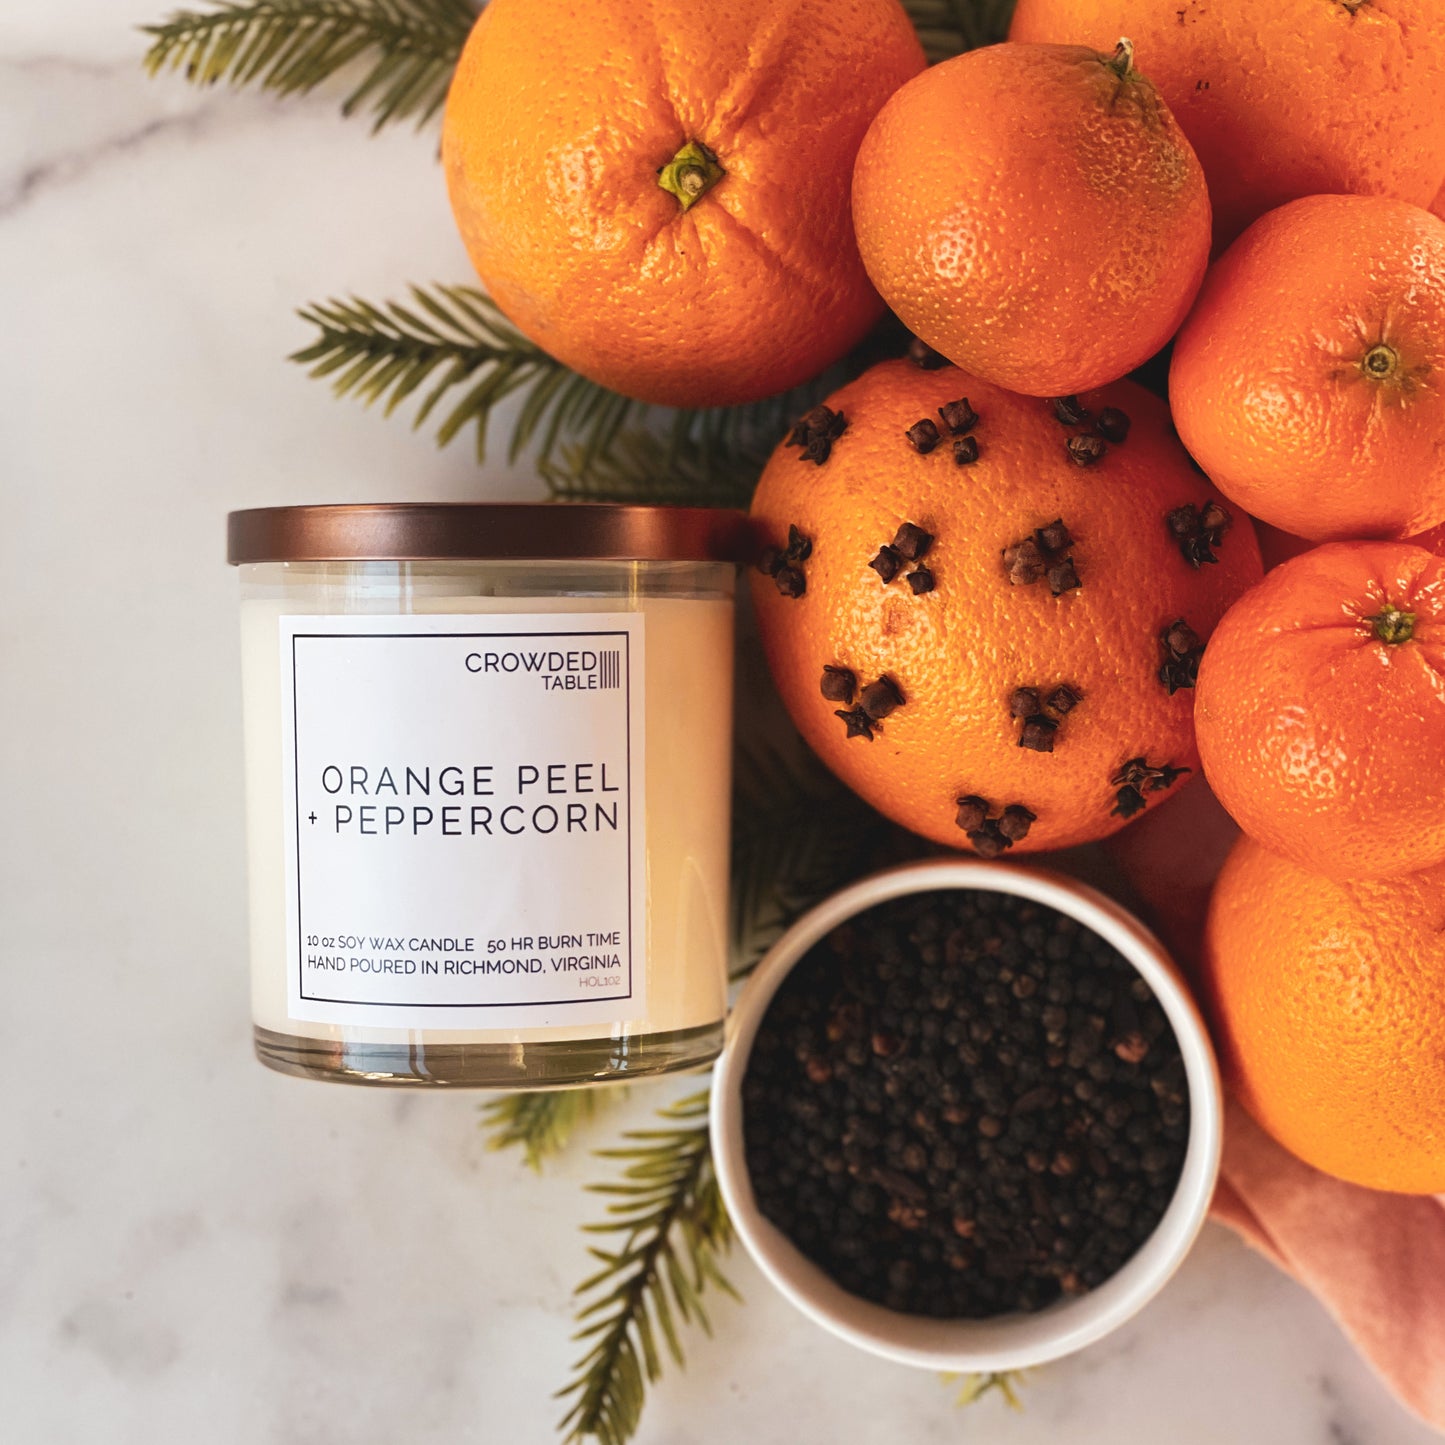 Orange Peel + Peppercorn 10 oz. Pure Soy Wax Candle